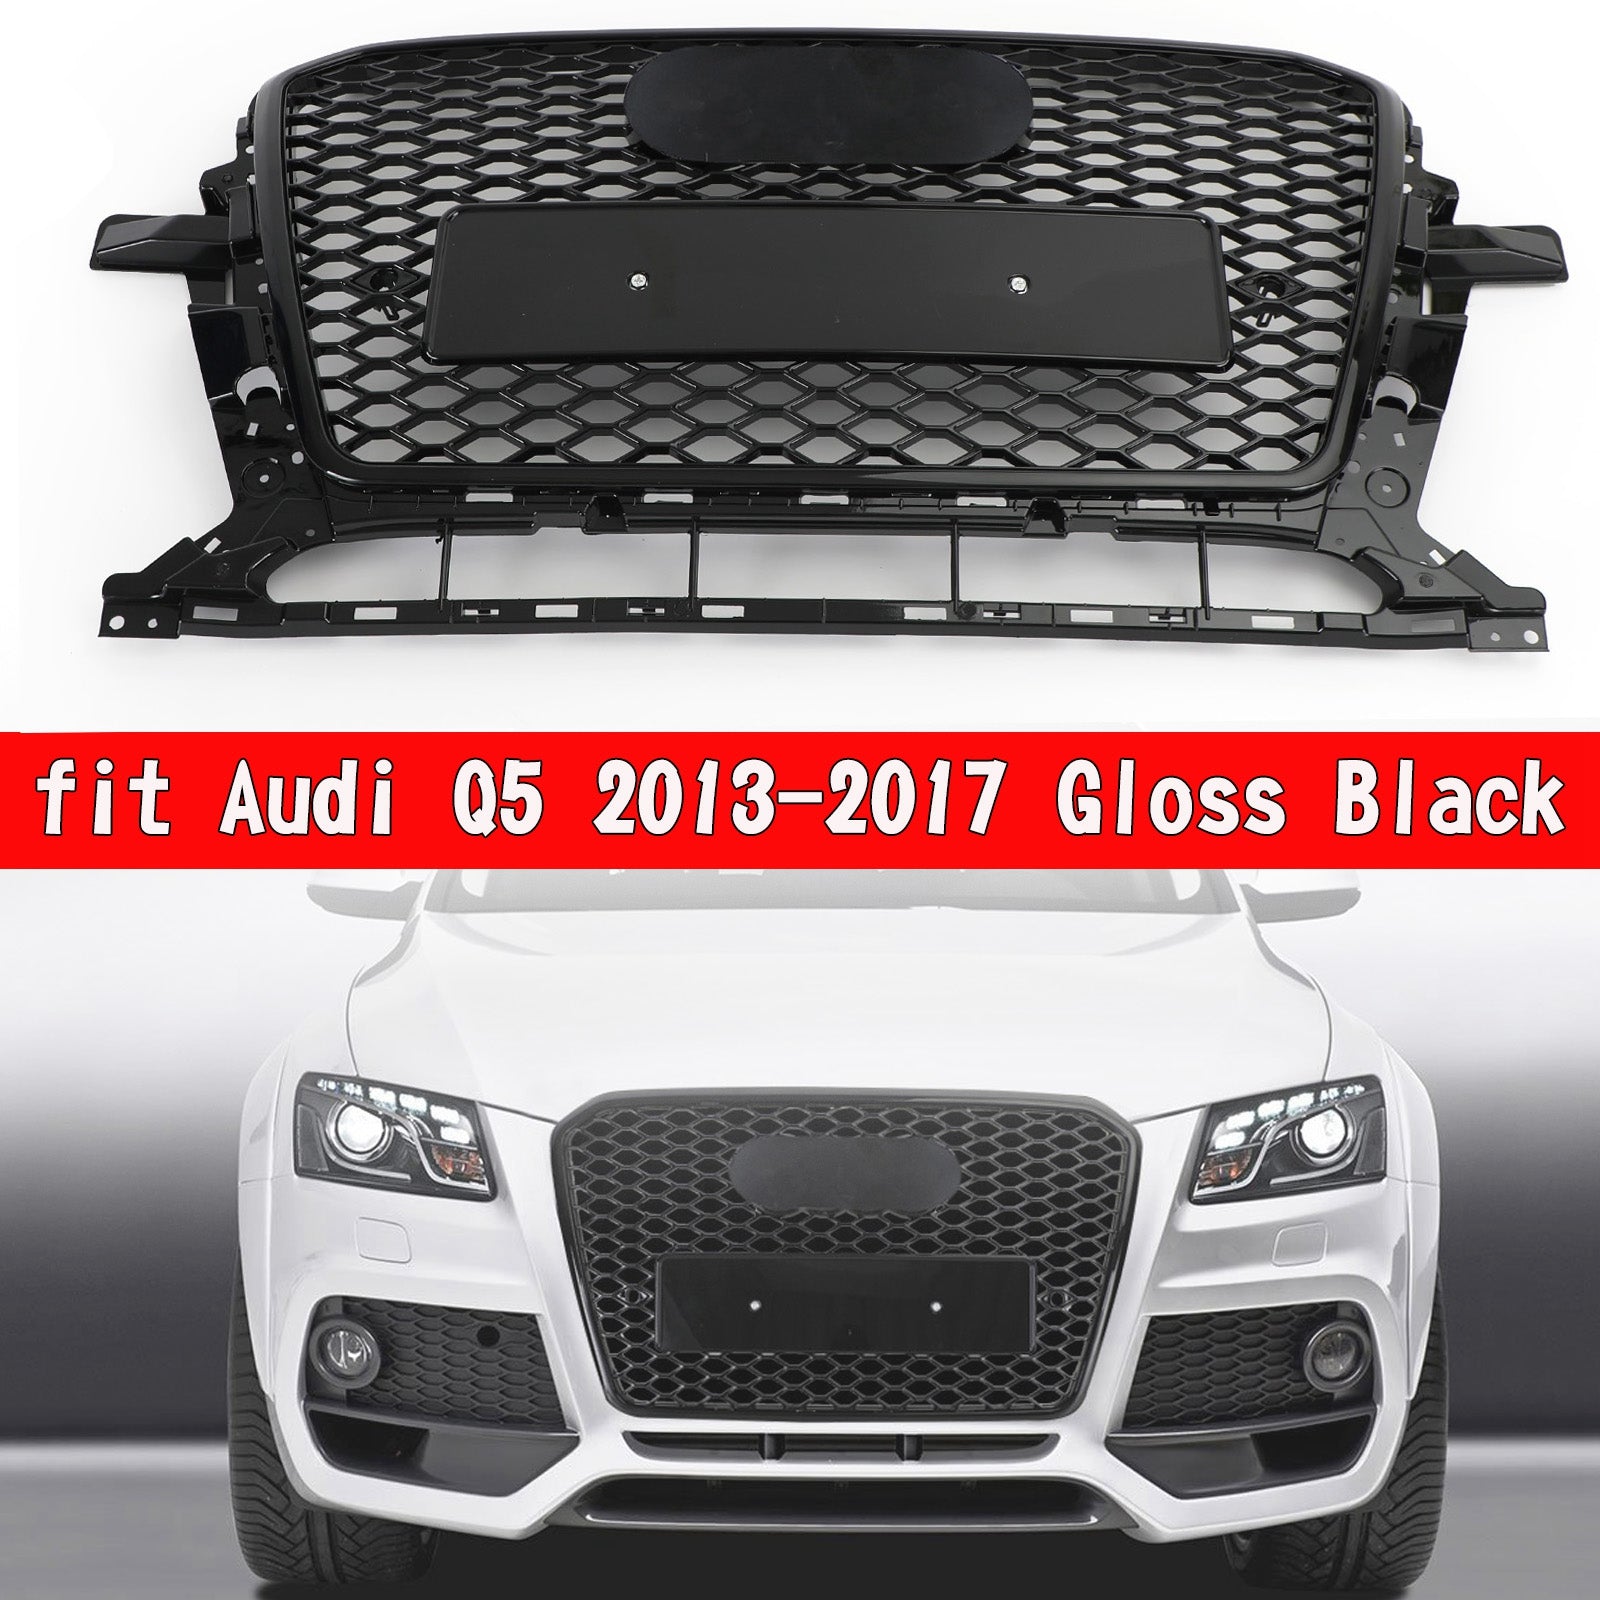 RSQ5 Style Honeycomb Mesh Sport Hex Grill fit Audi Q5 2013-2017 Gloss Black